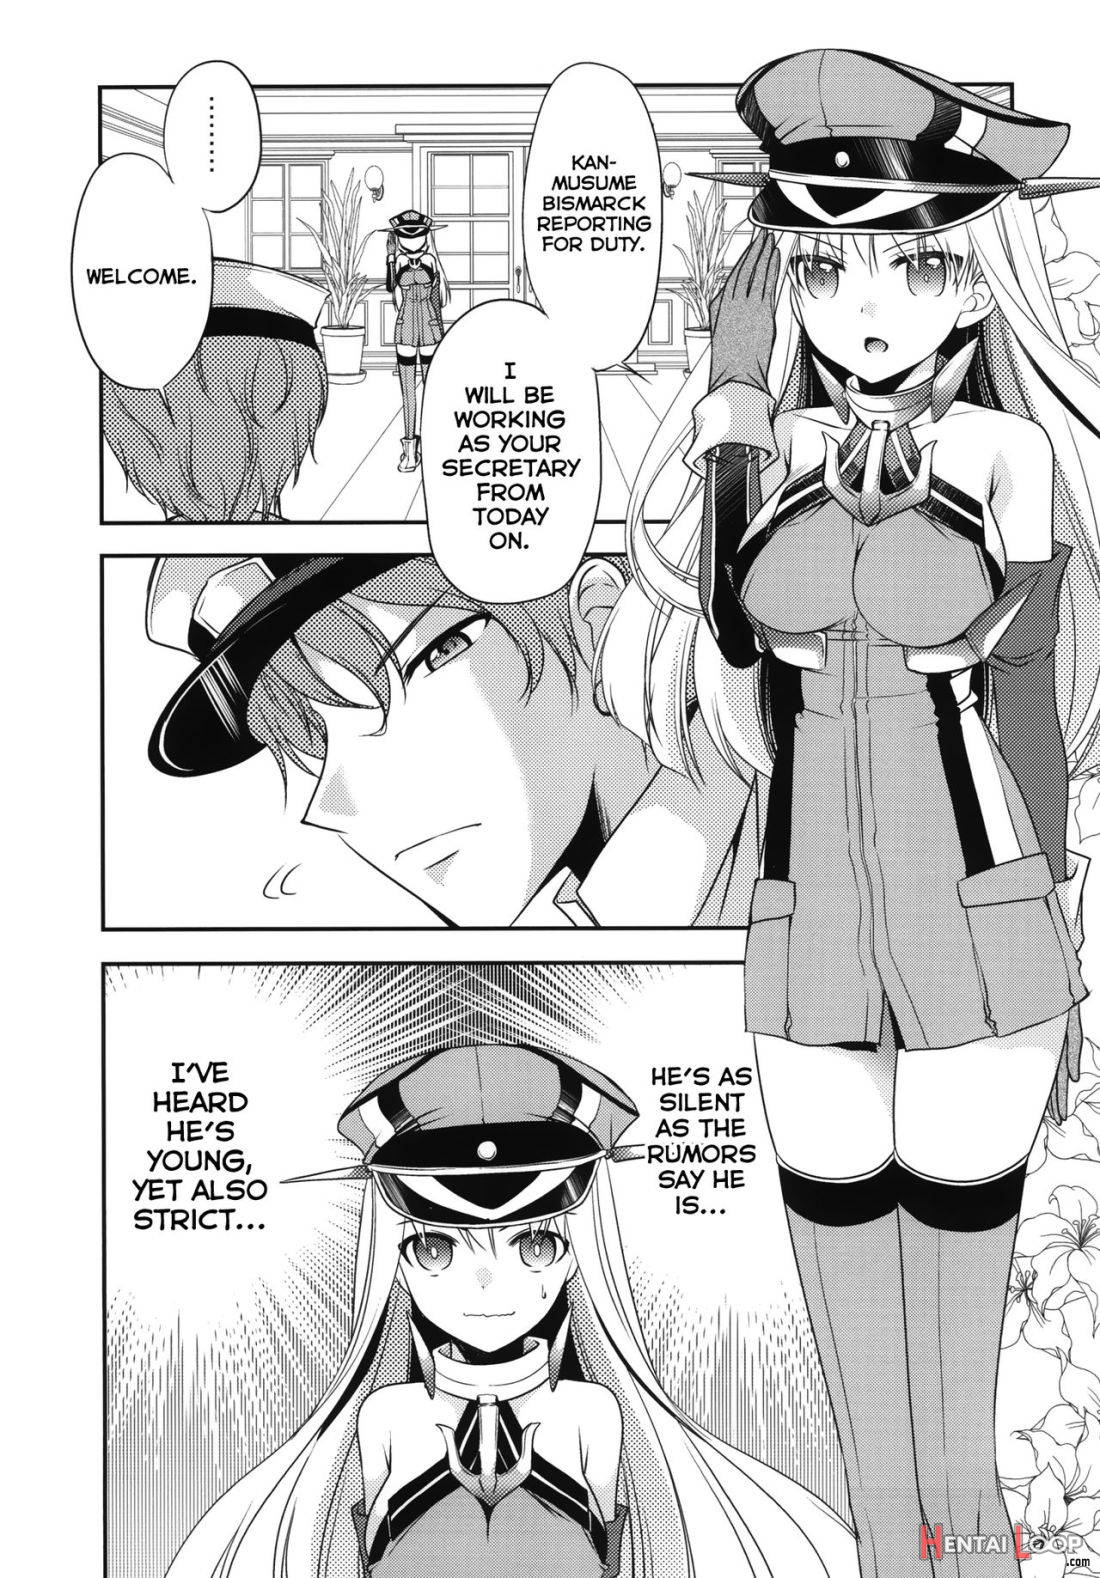 Omorashi Bismarck page 2